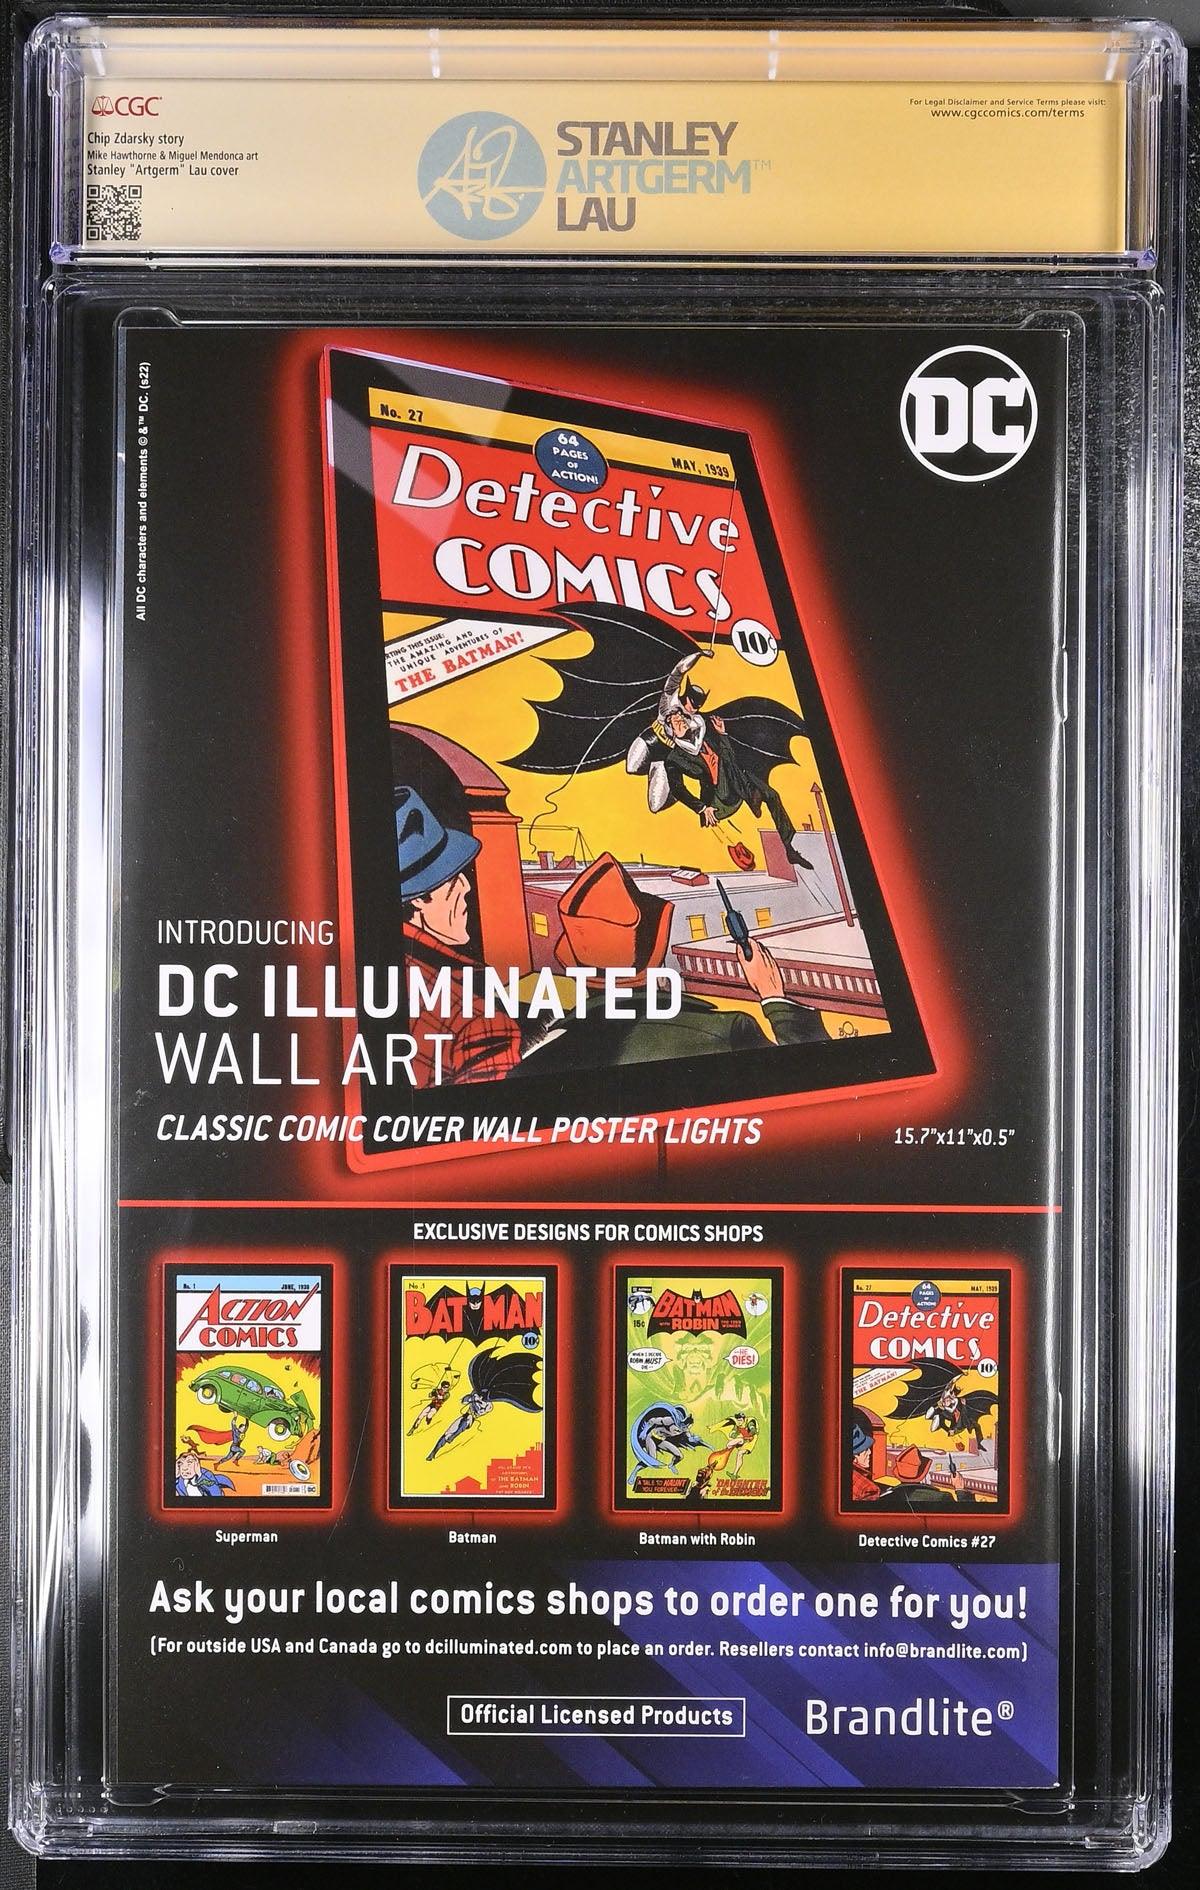 CGC BATMAN VOL 3 #131 LAU VARIANT (9.8) SIGNATURE SERIES - SIGNED BY STANLEY "ARTGERM" - Kings Comics